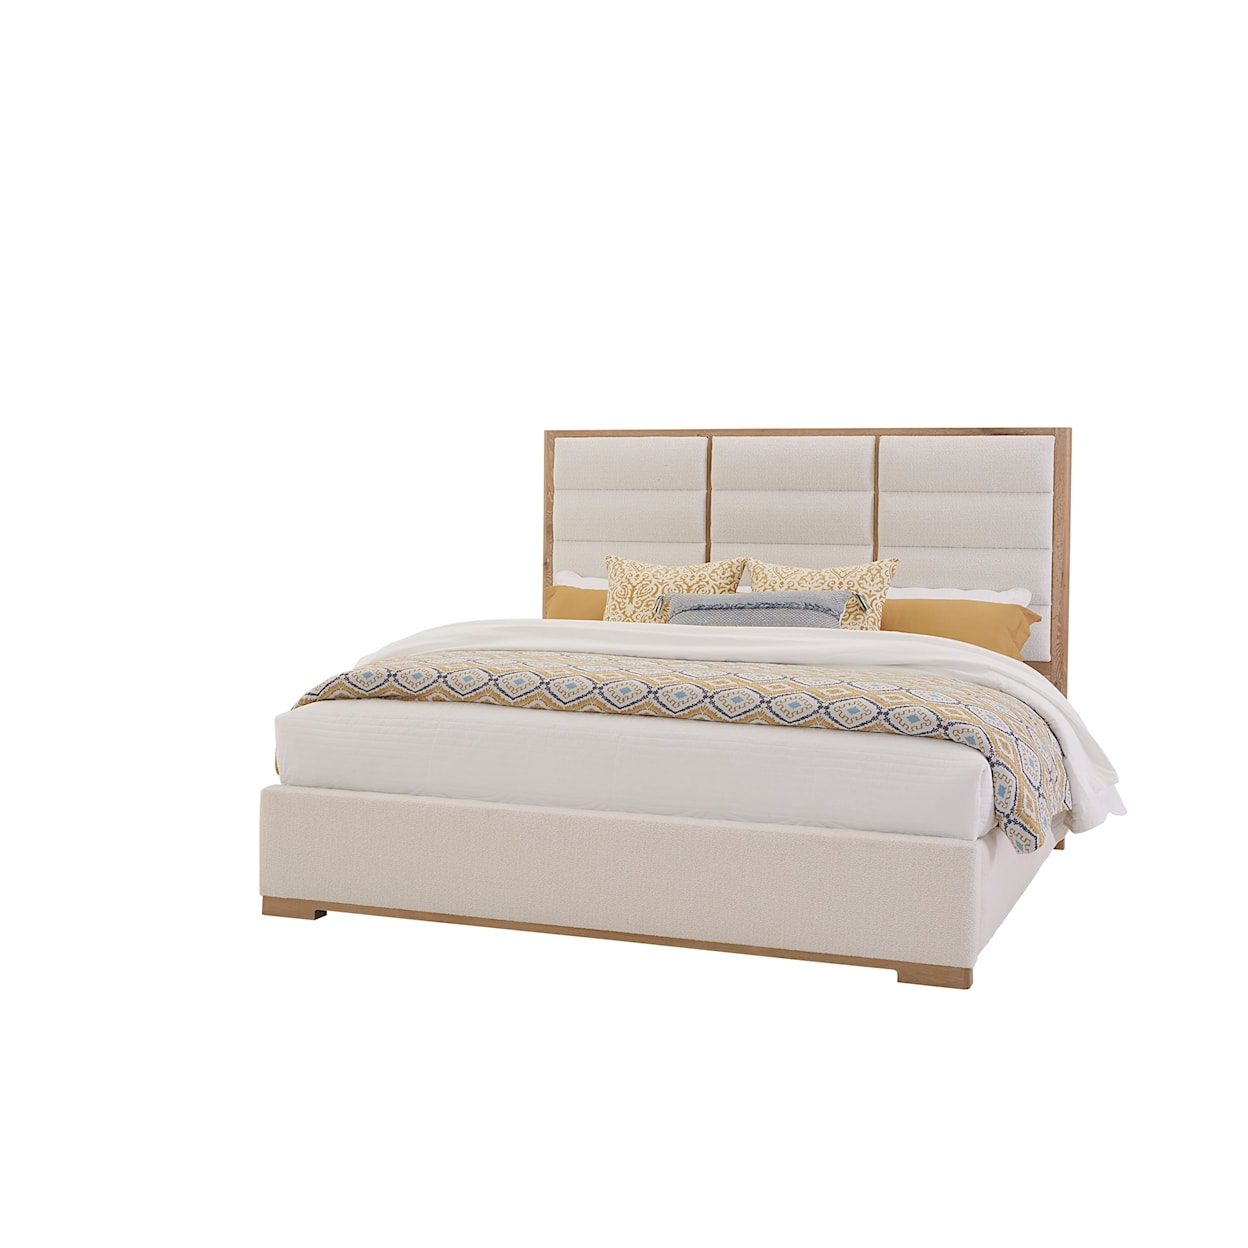 Vaughan Bassett Crafted Oak - Bleached White Upholstered King Panel Bedroom Set